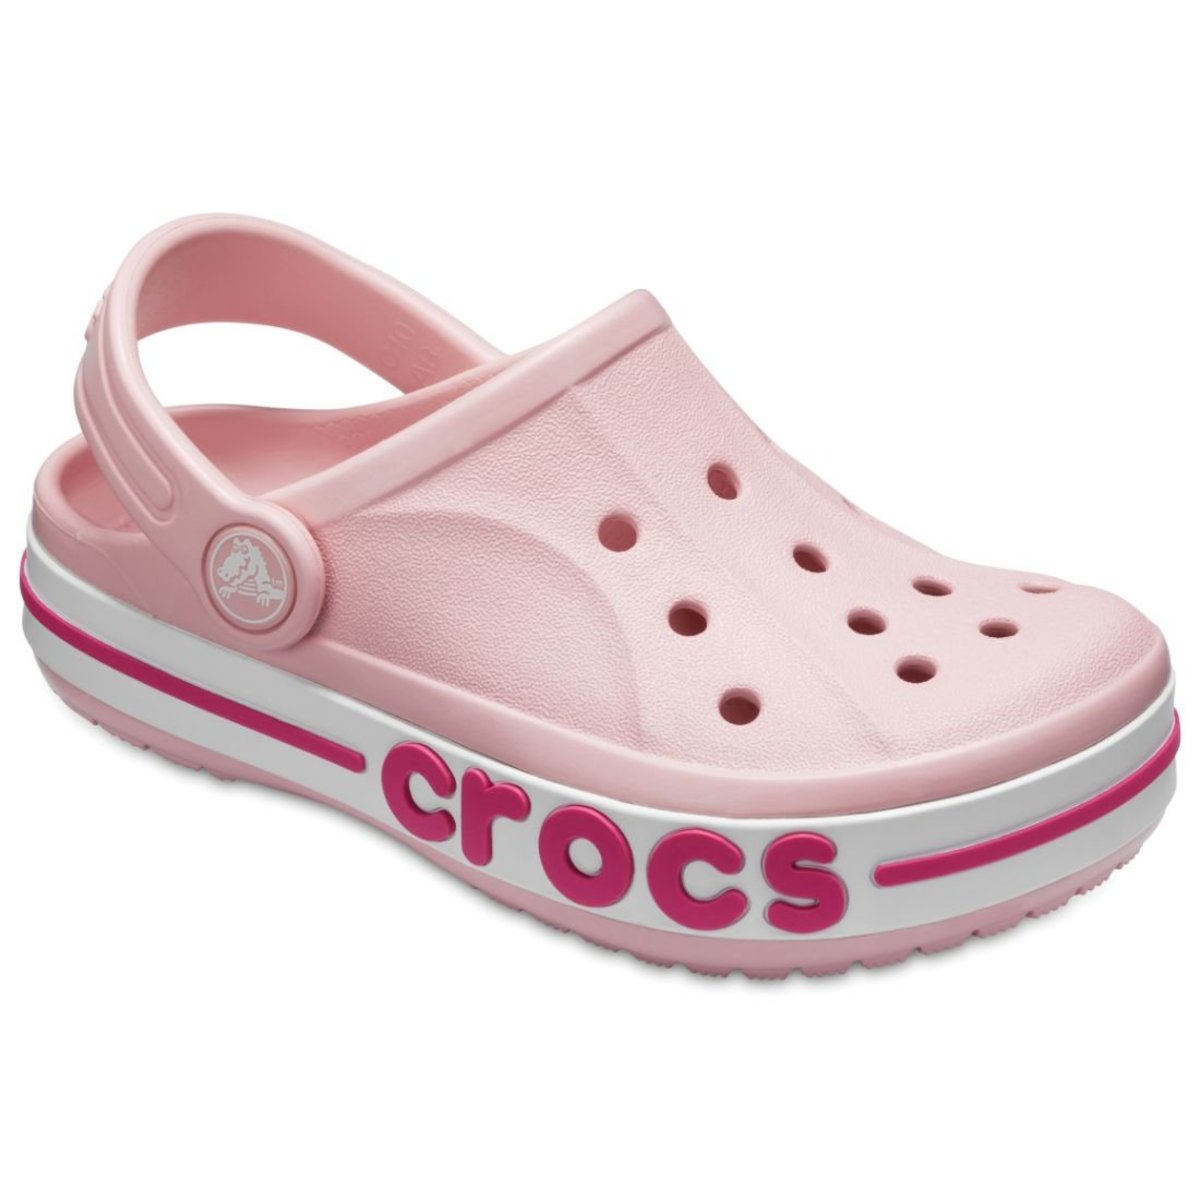 crocs shoes baby